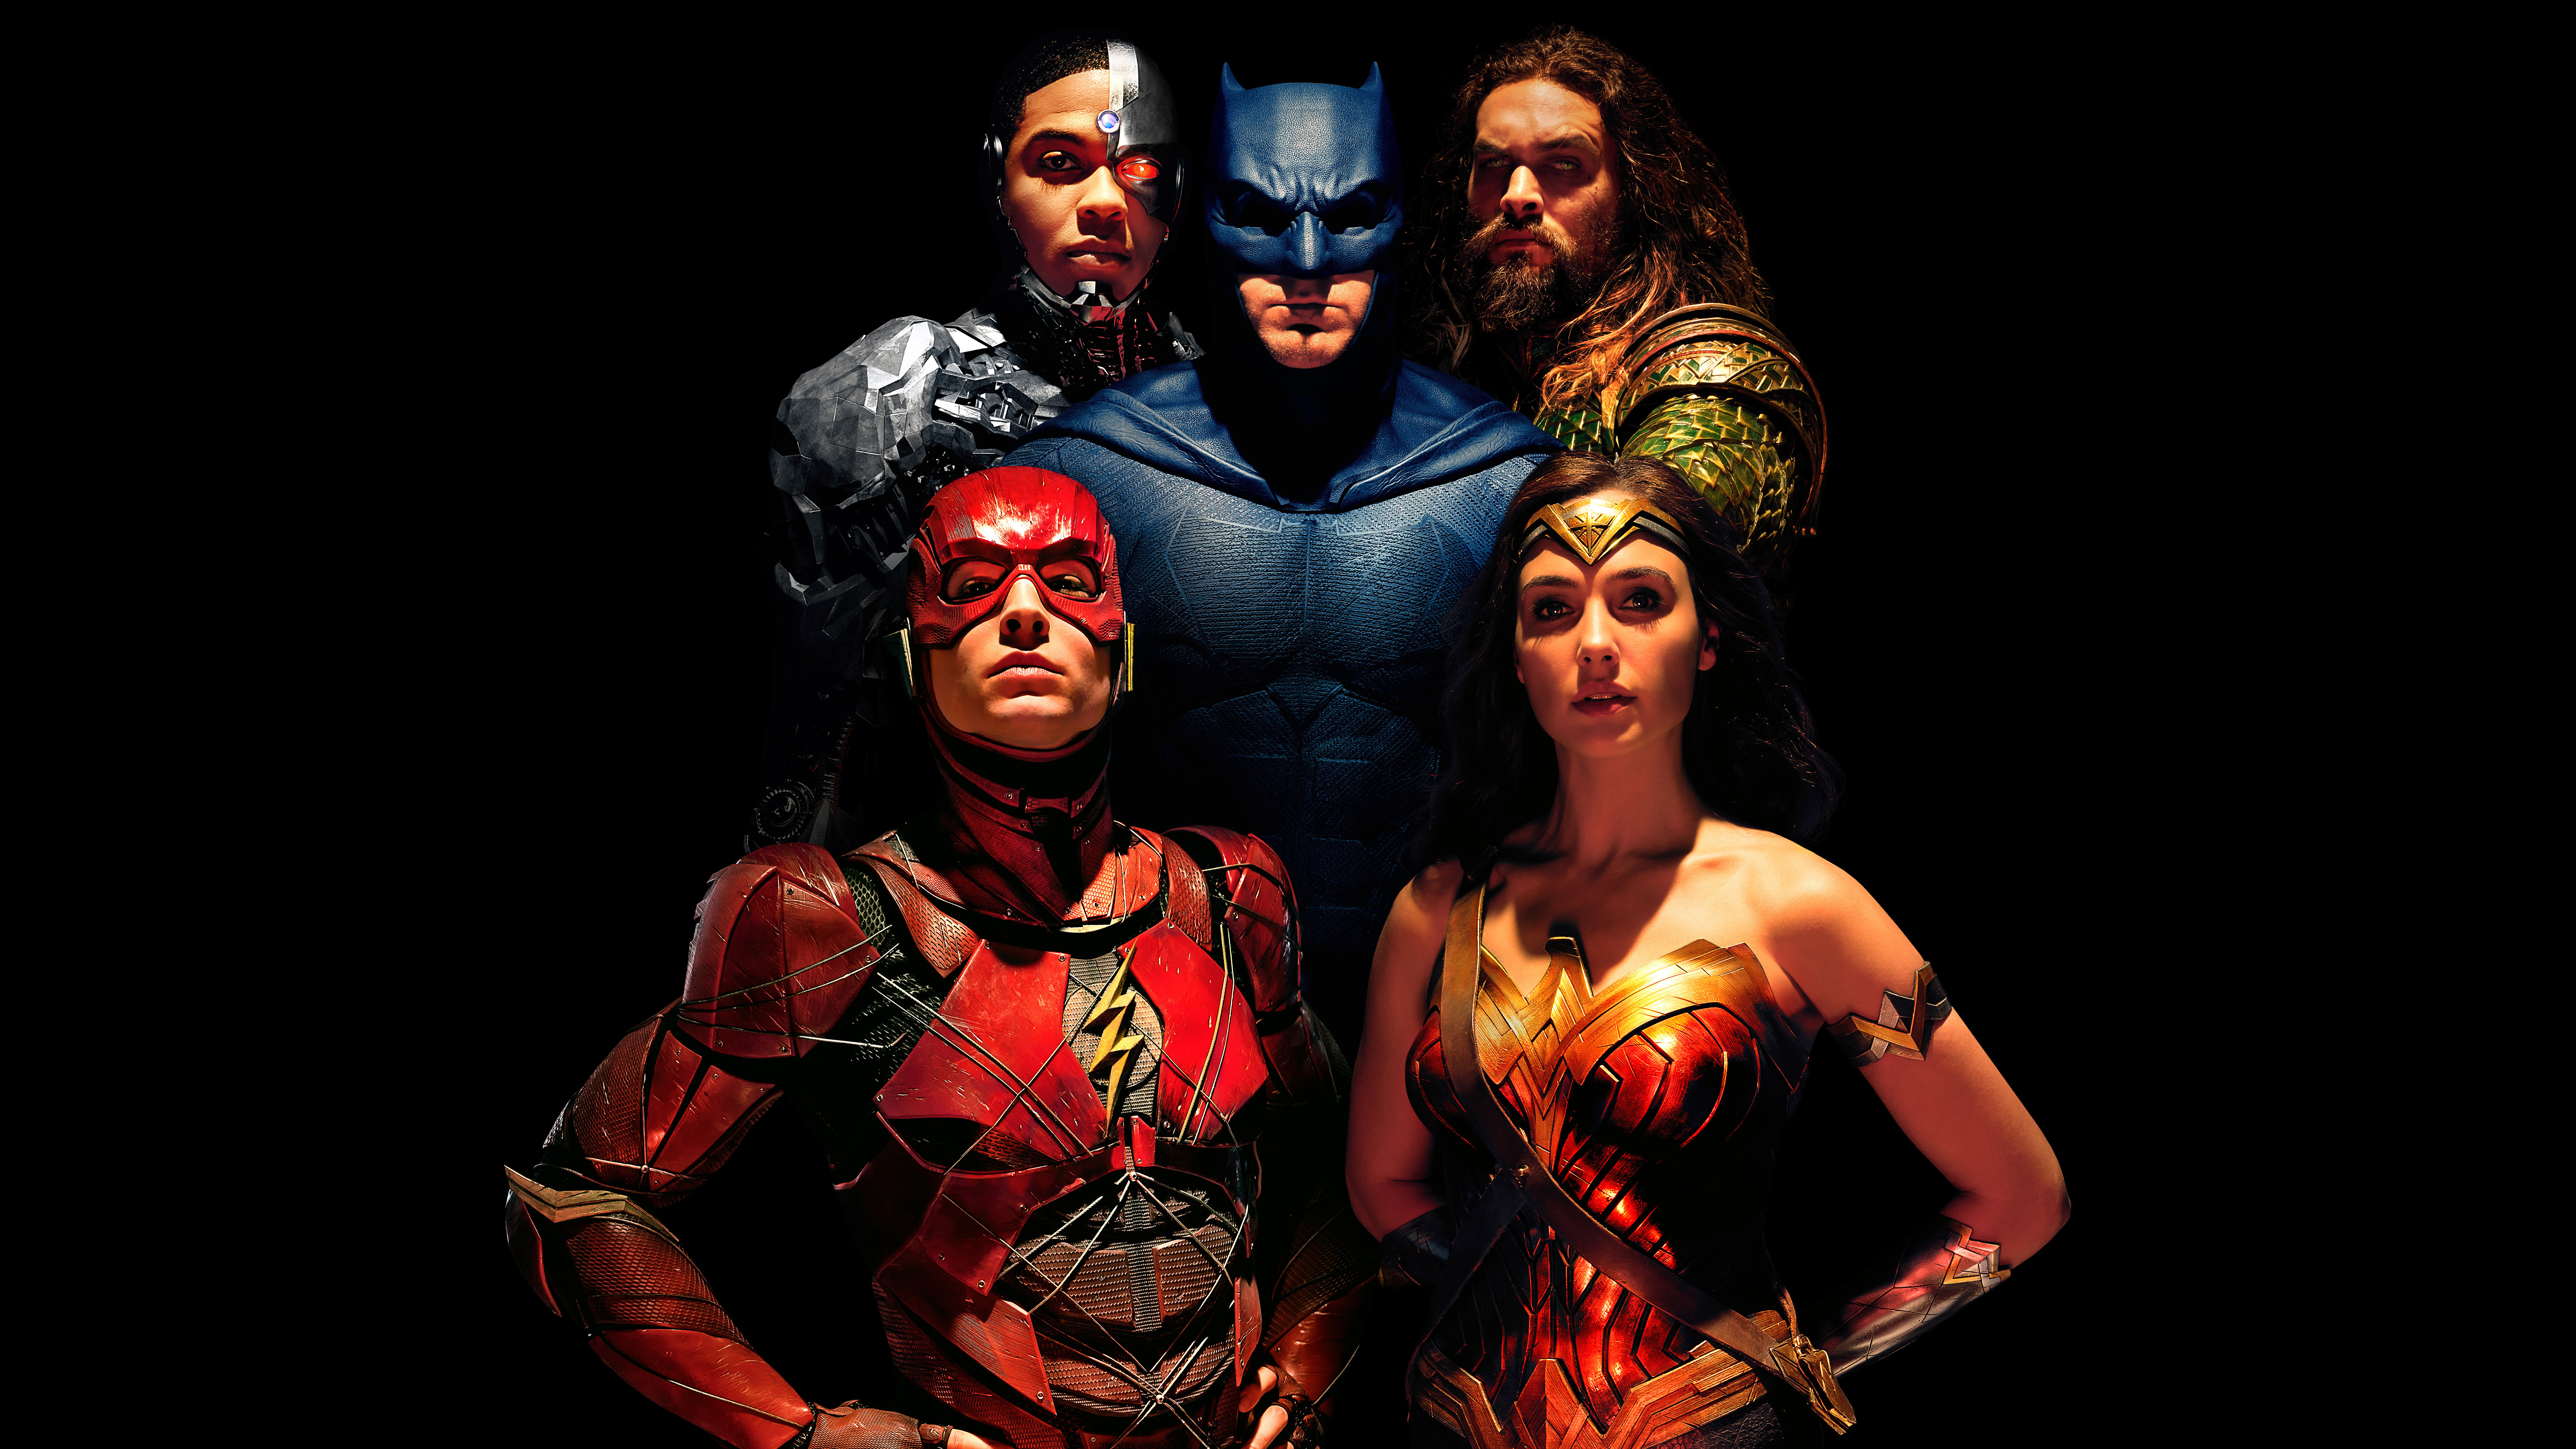 Wallpapers rendering Wonder woman justice league on the desktop